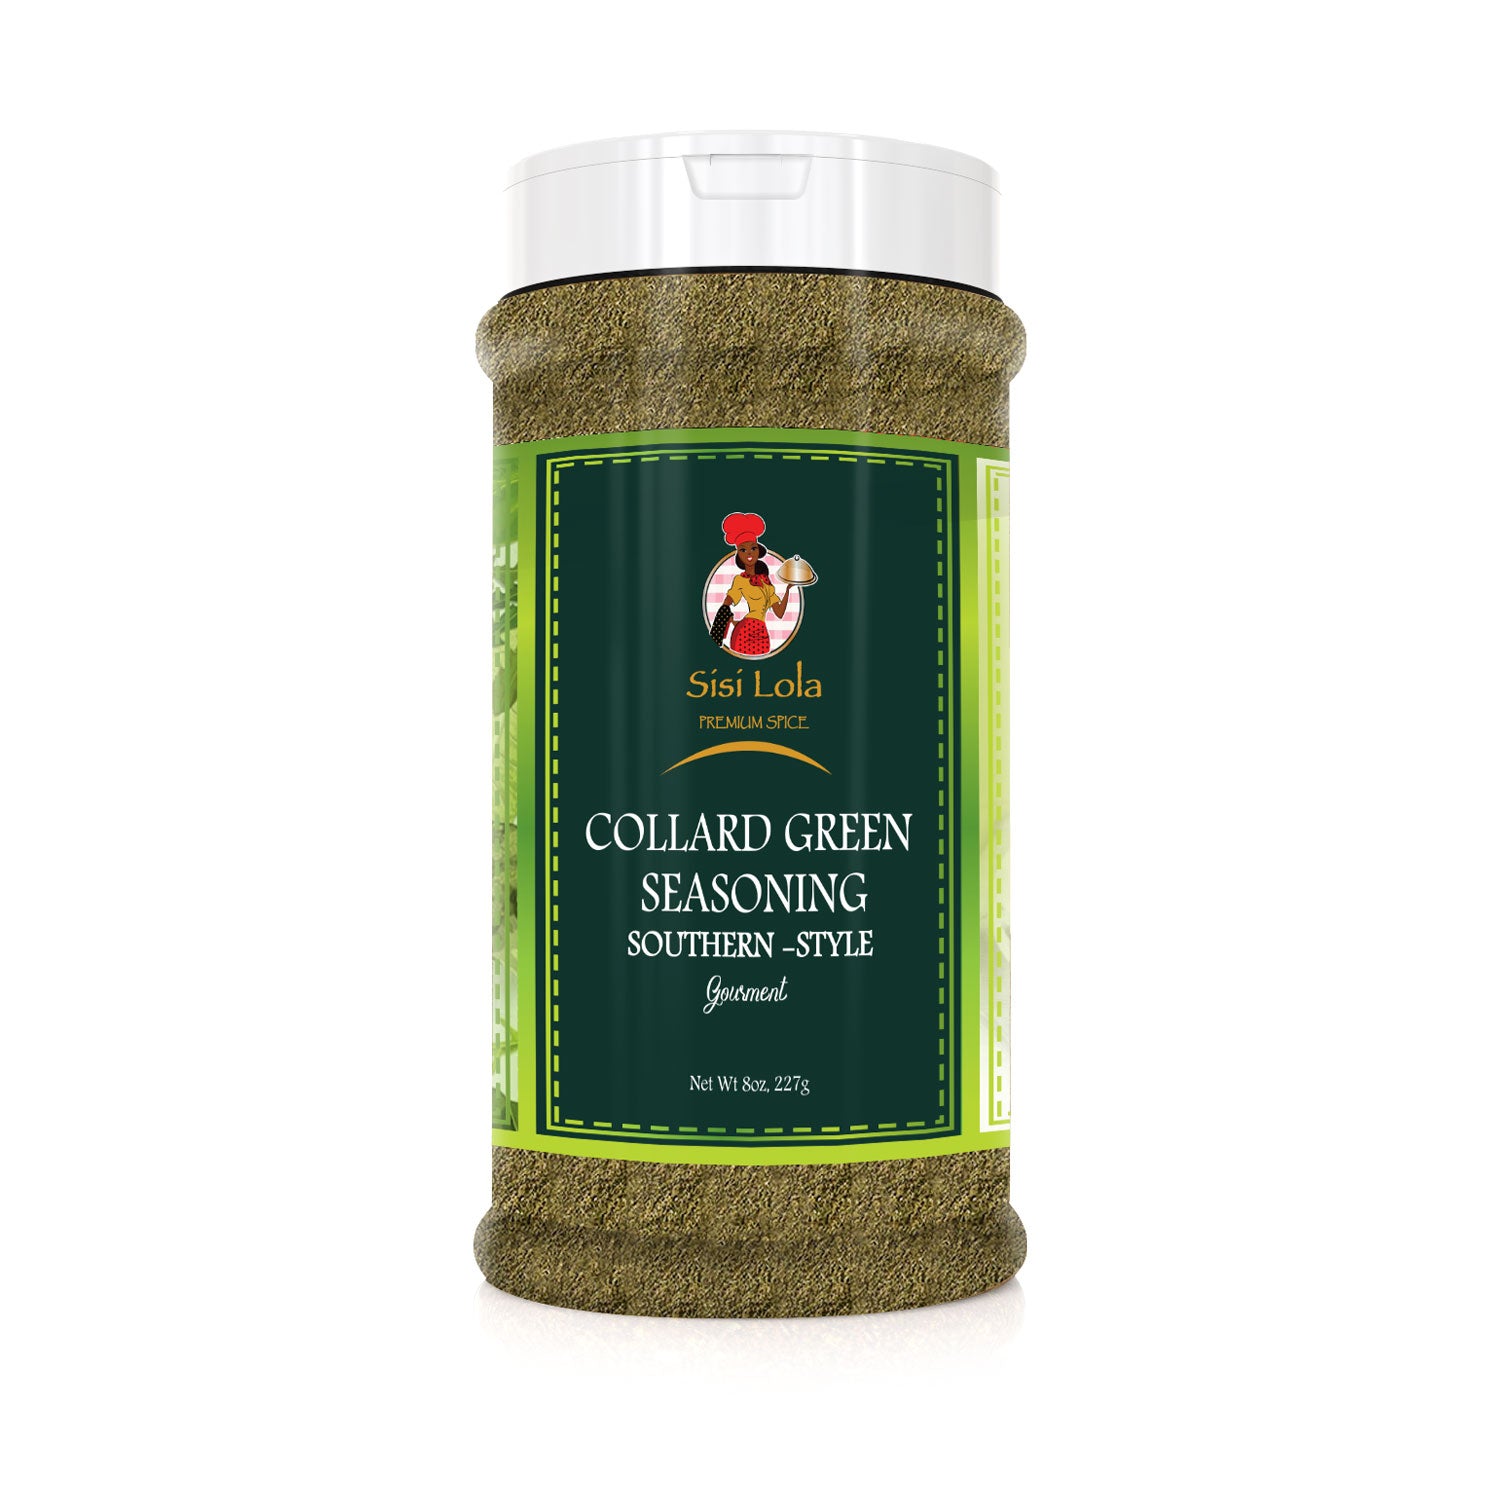 Sisi Lola Collard Green Seasoning – Hand-Crafted Southern-Style Blend for Collard Greens, Vegetables, Kale, Spinach, Asparagus, Turkey Necks – Vegan